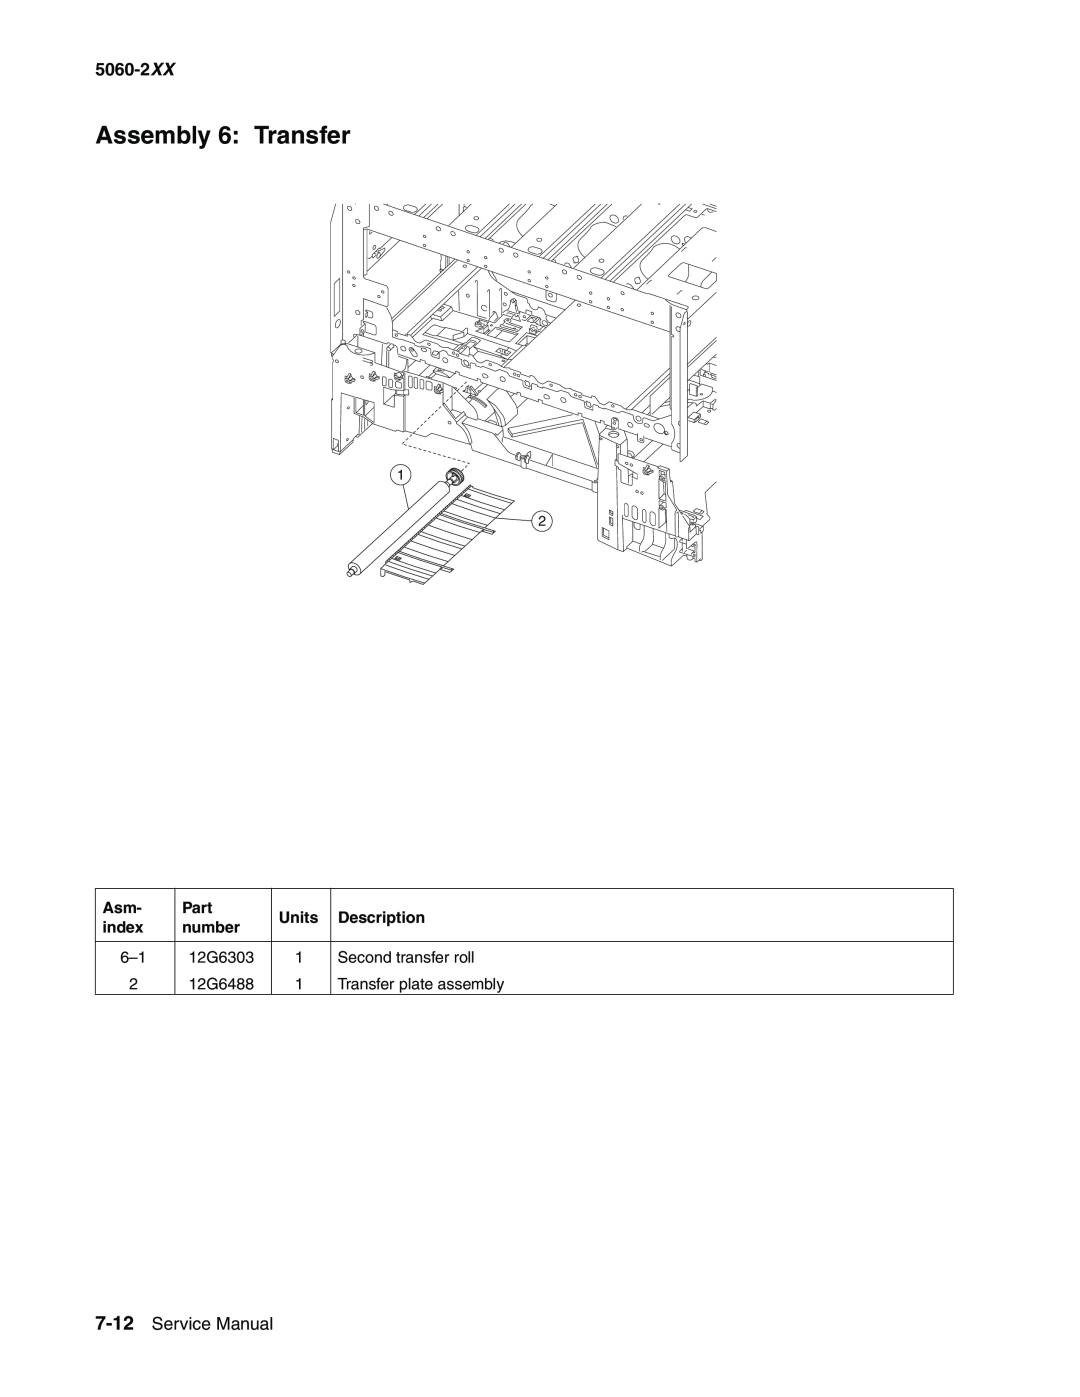 Lexmark 5060-2XX manual Assembly 6 Transfer, Service Manual, Part, Units, Description, index, number 